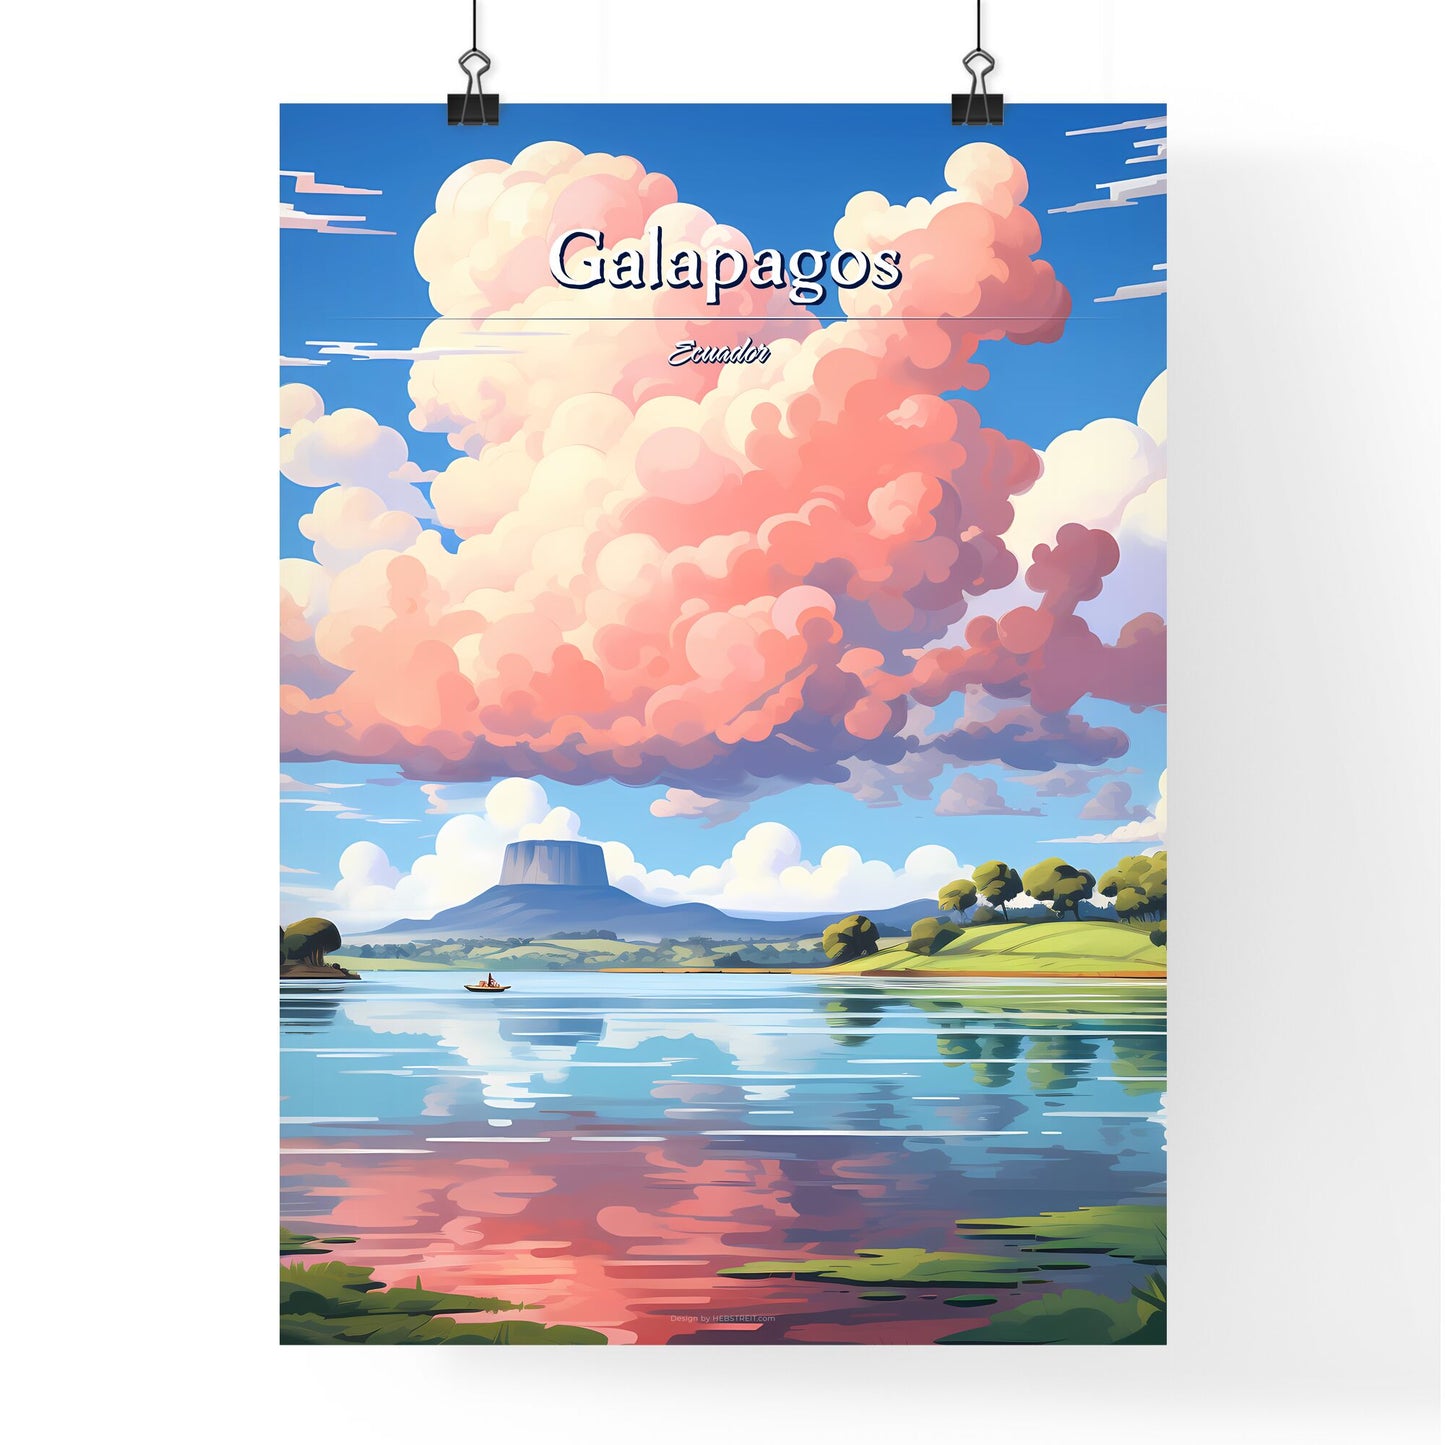 Galapagos, Ecuador - Art print of a pink clouds over a lake Default Title